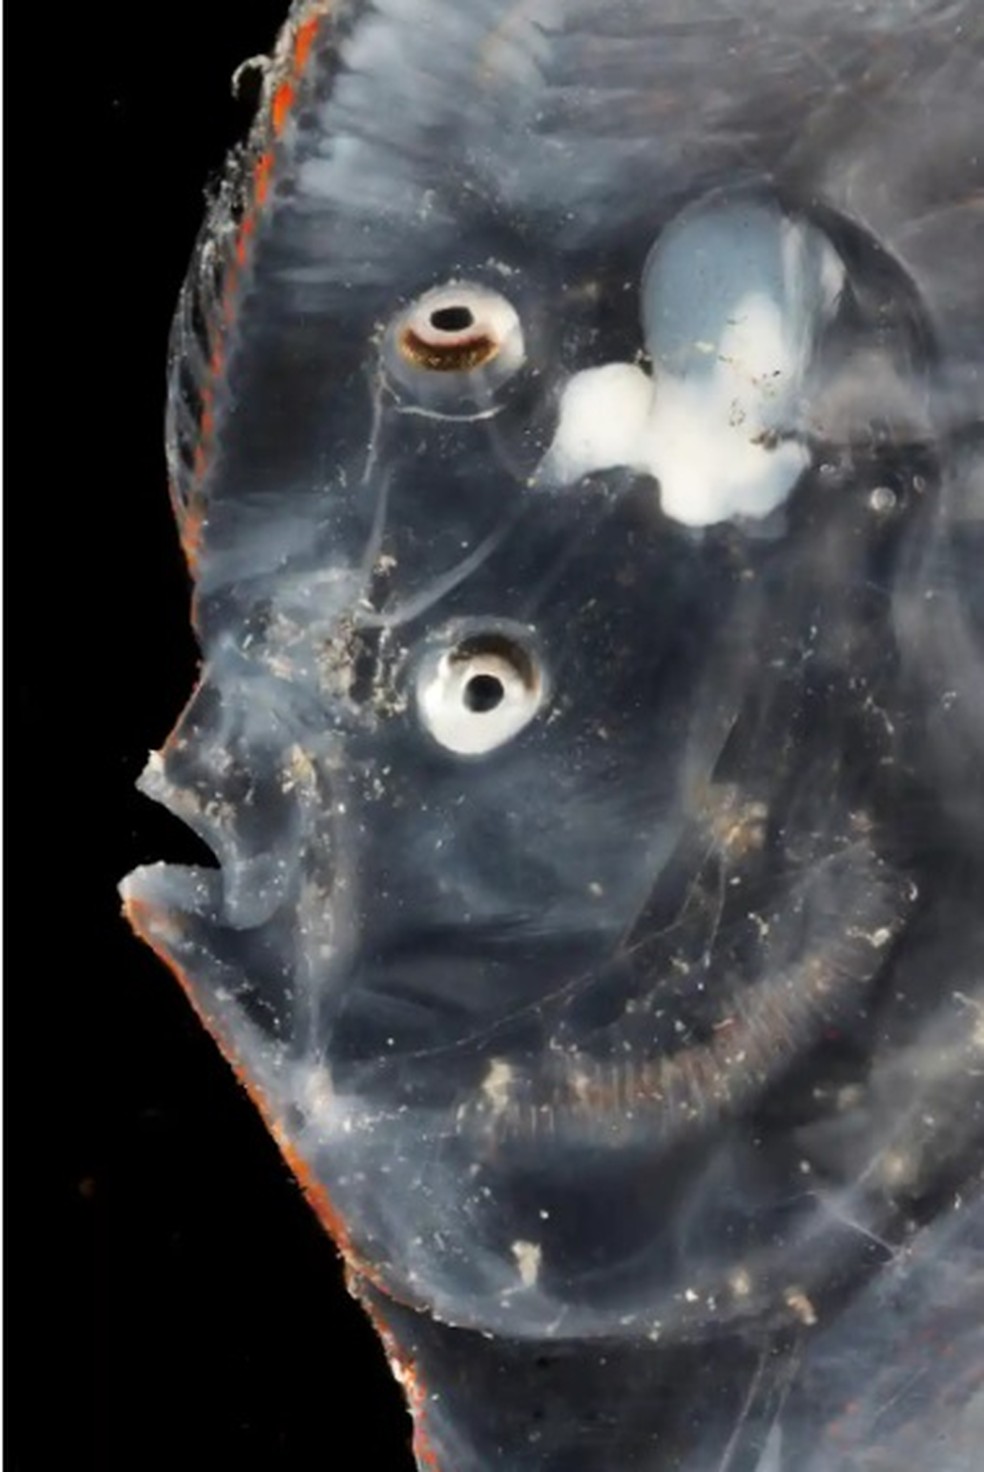 Um peixe chato da ordem Pleuronectiformes encontrado pelos pesquisadores — Foto: Benjamin Healley